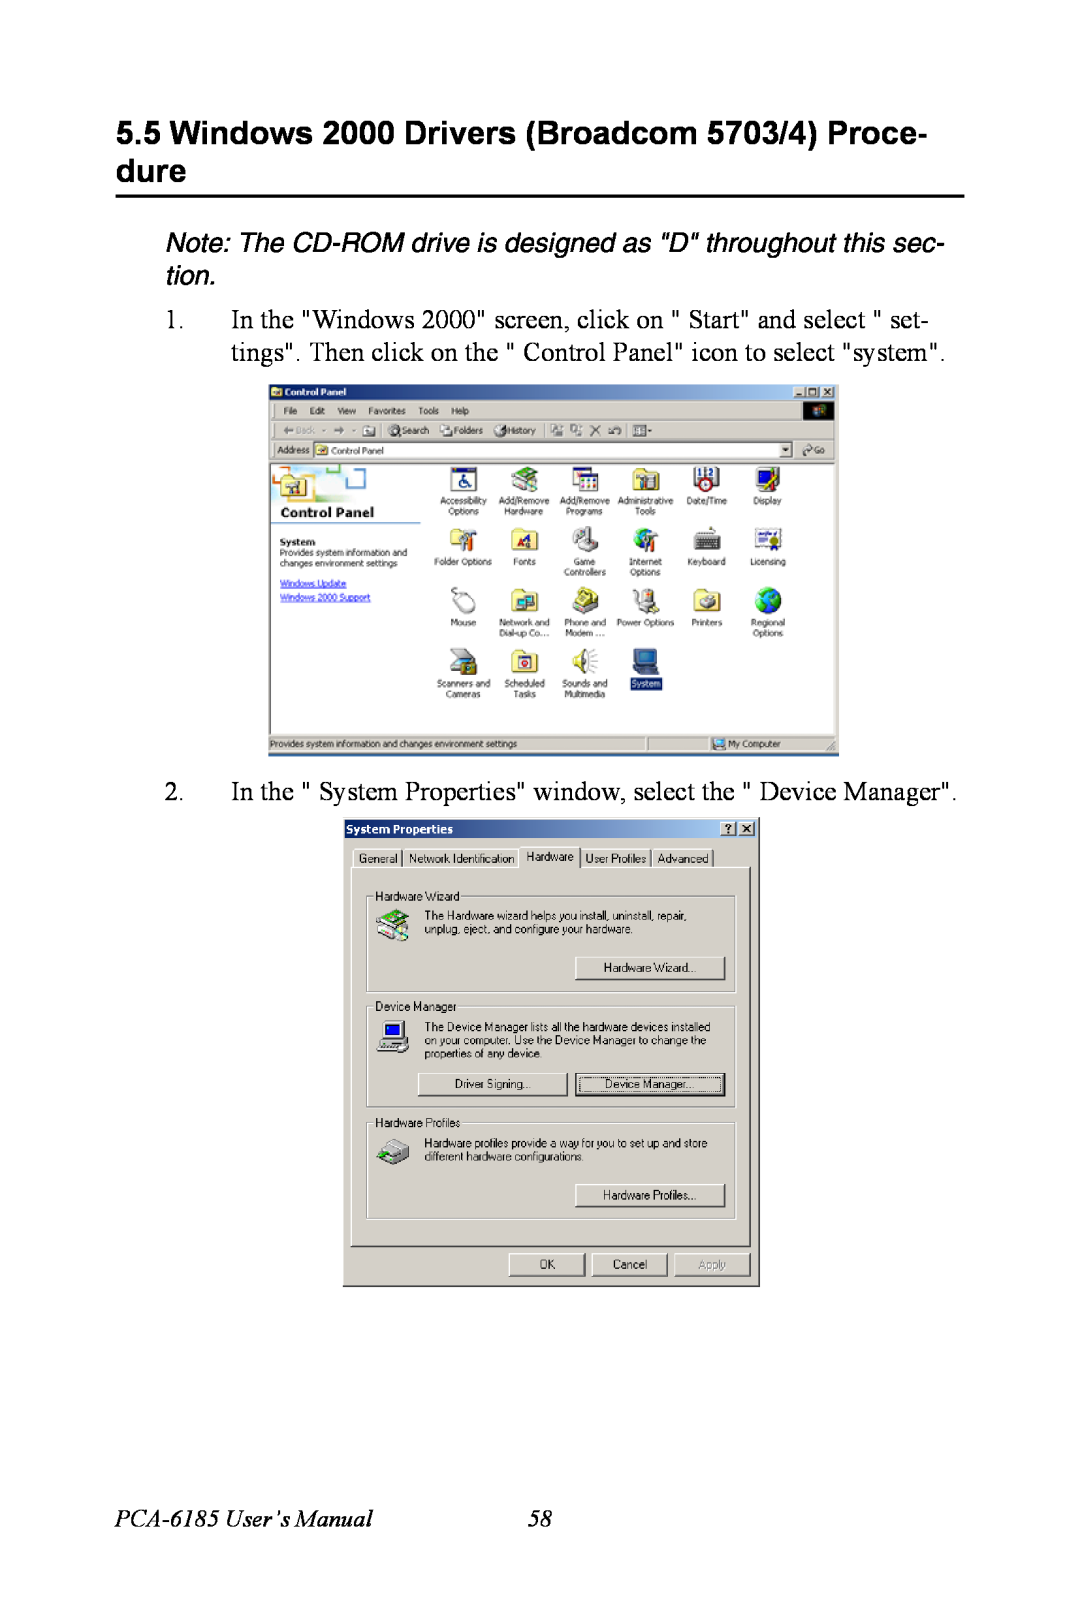 Advantech user manual Windows 2000 Drivers Broadcom 5703/4 Proce- dure, PCA-6185 User’s Manual 